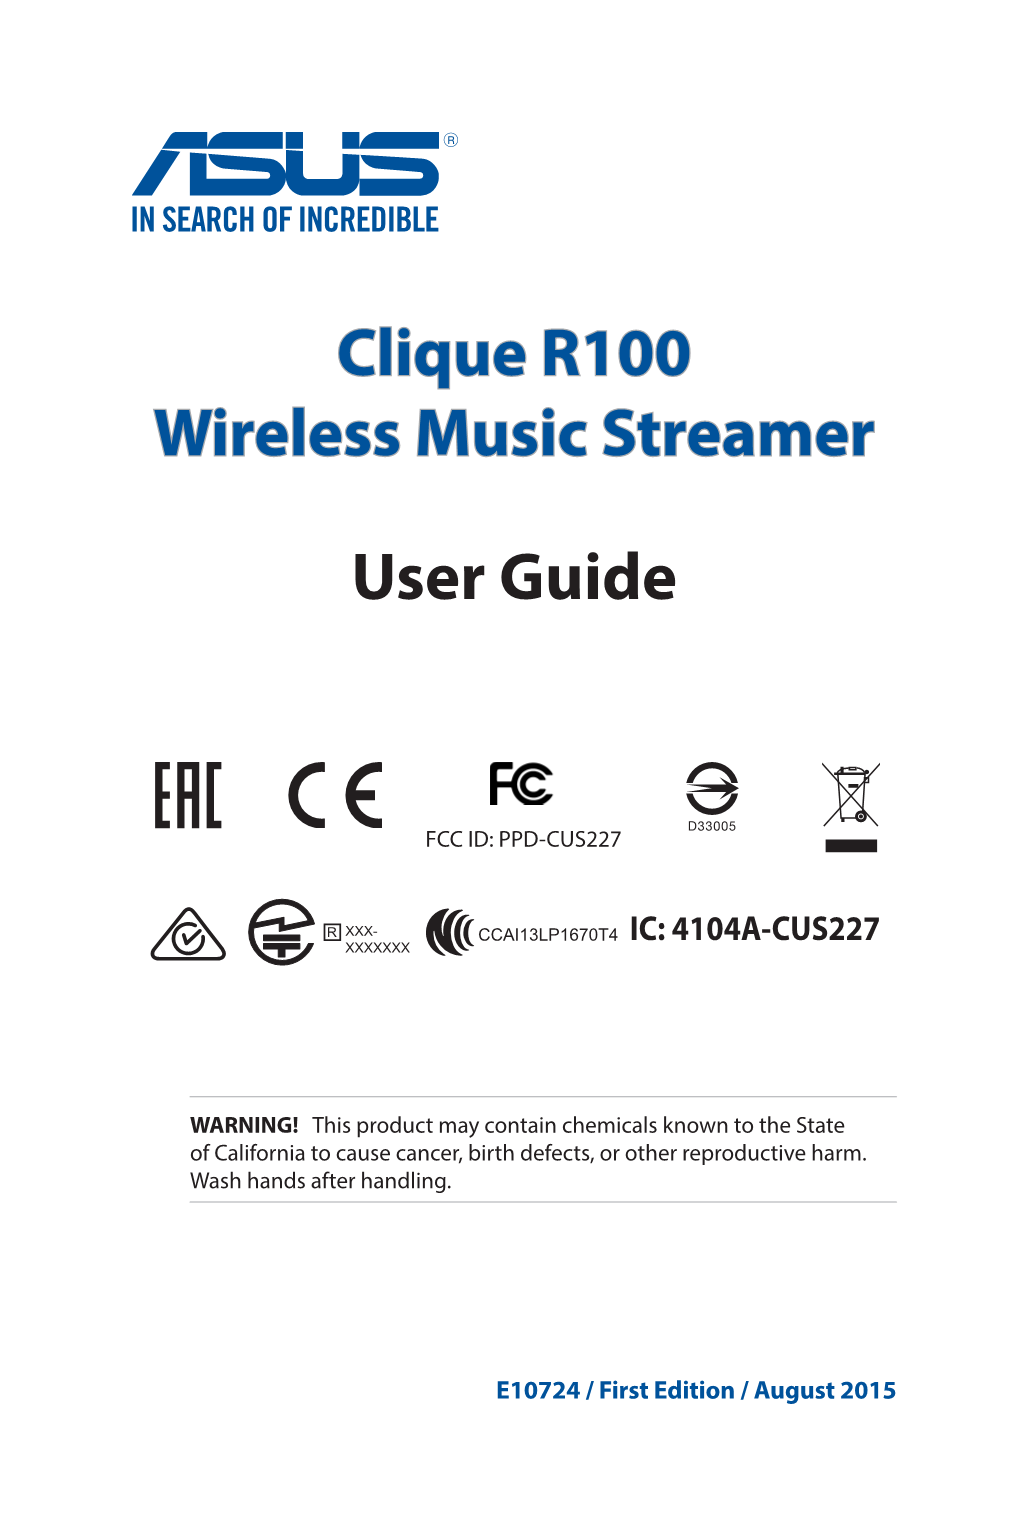 Clique R100 Wireless Music Streamer User Guide